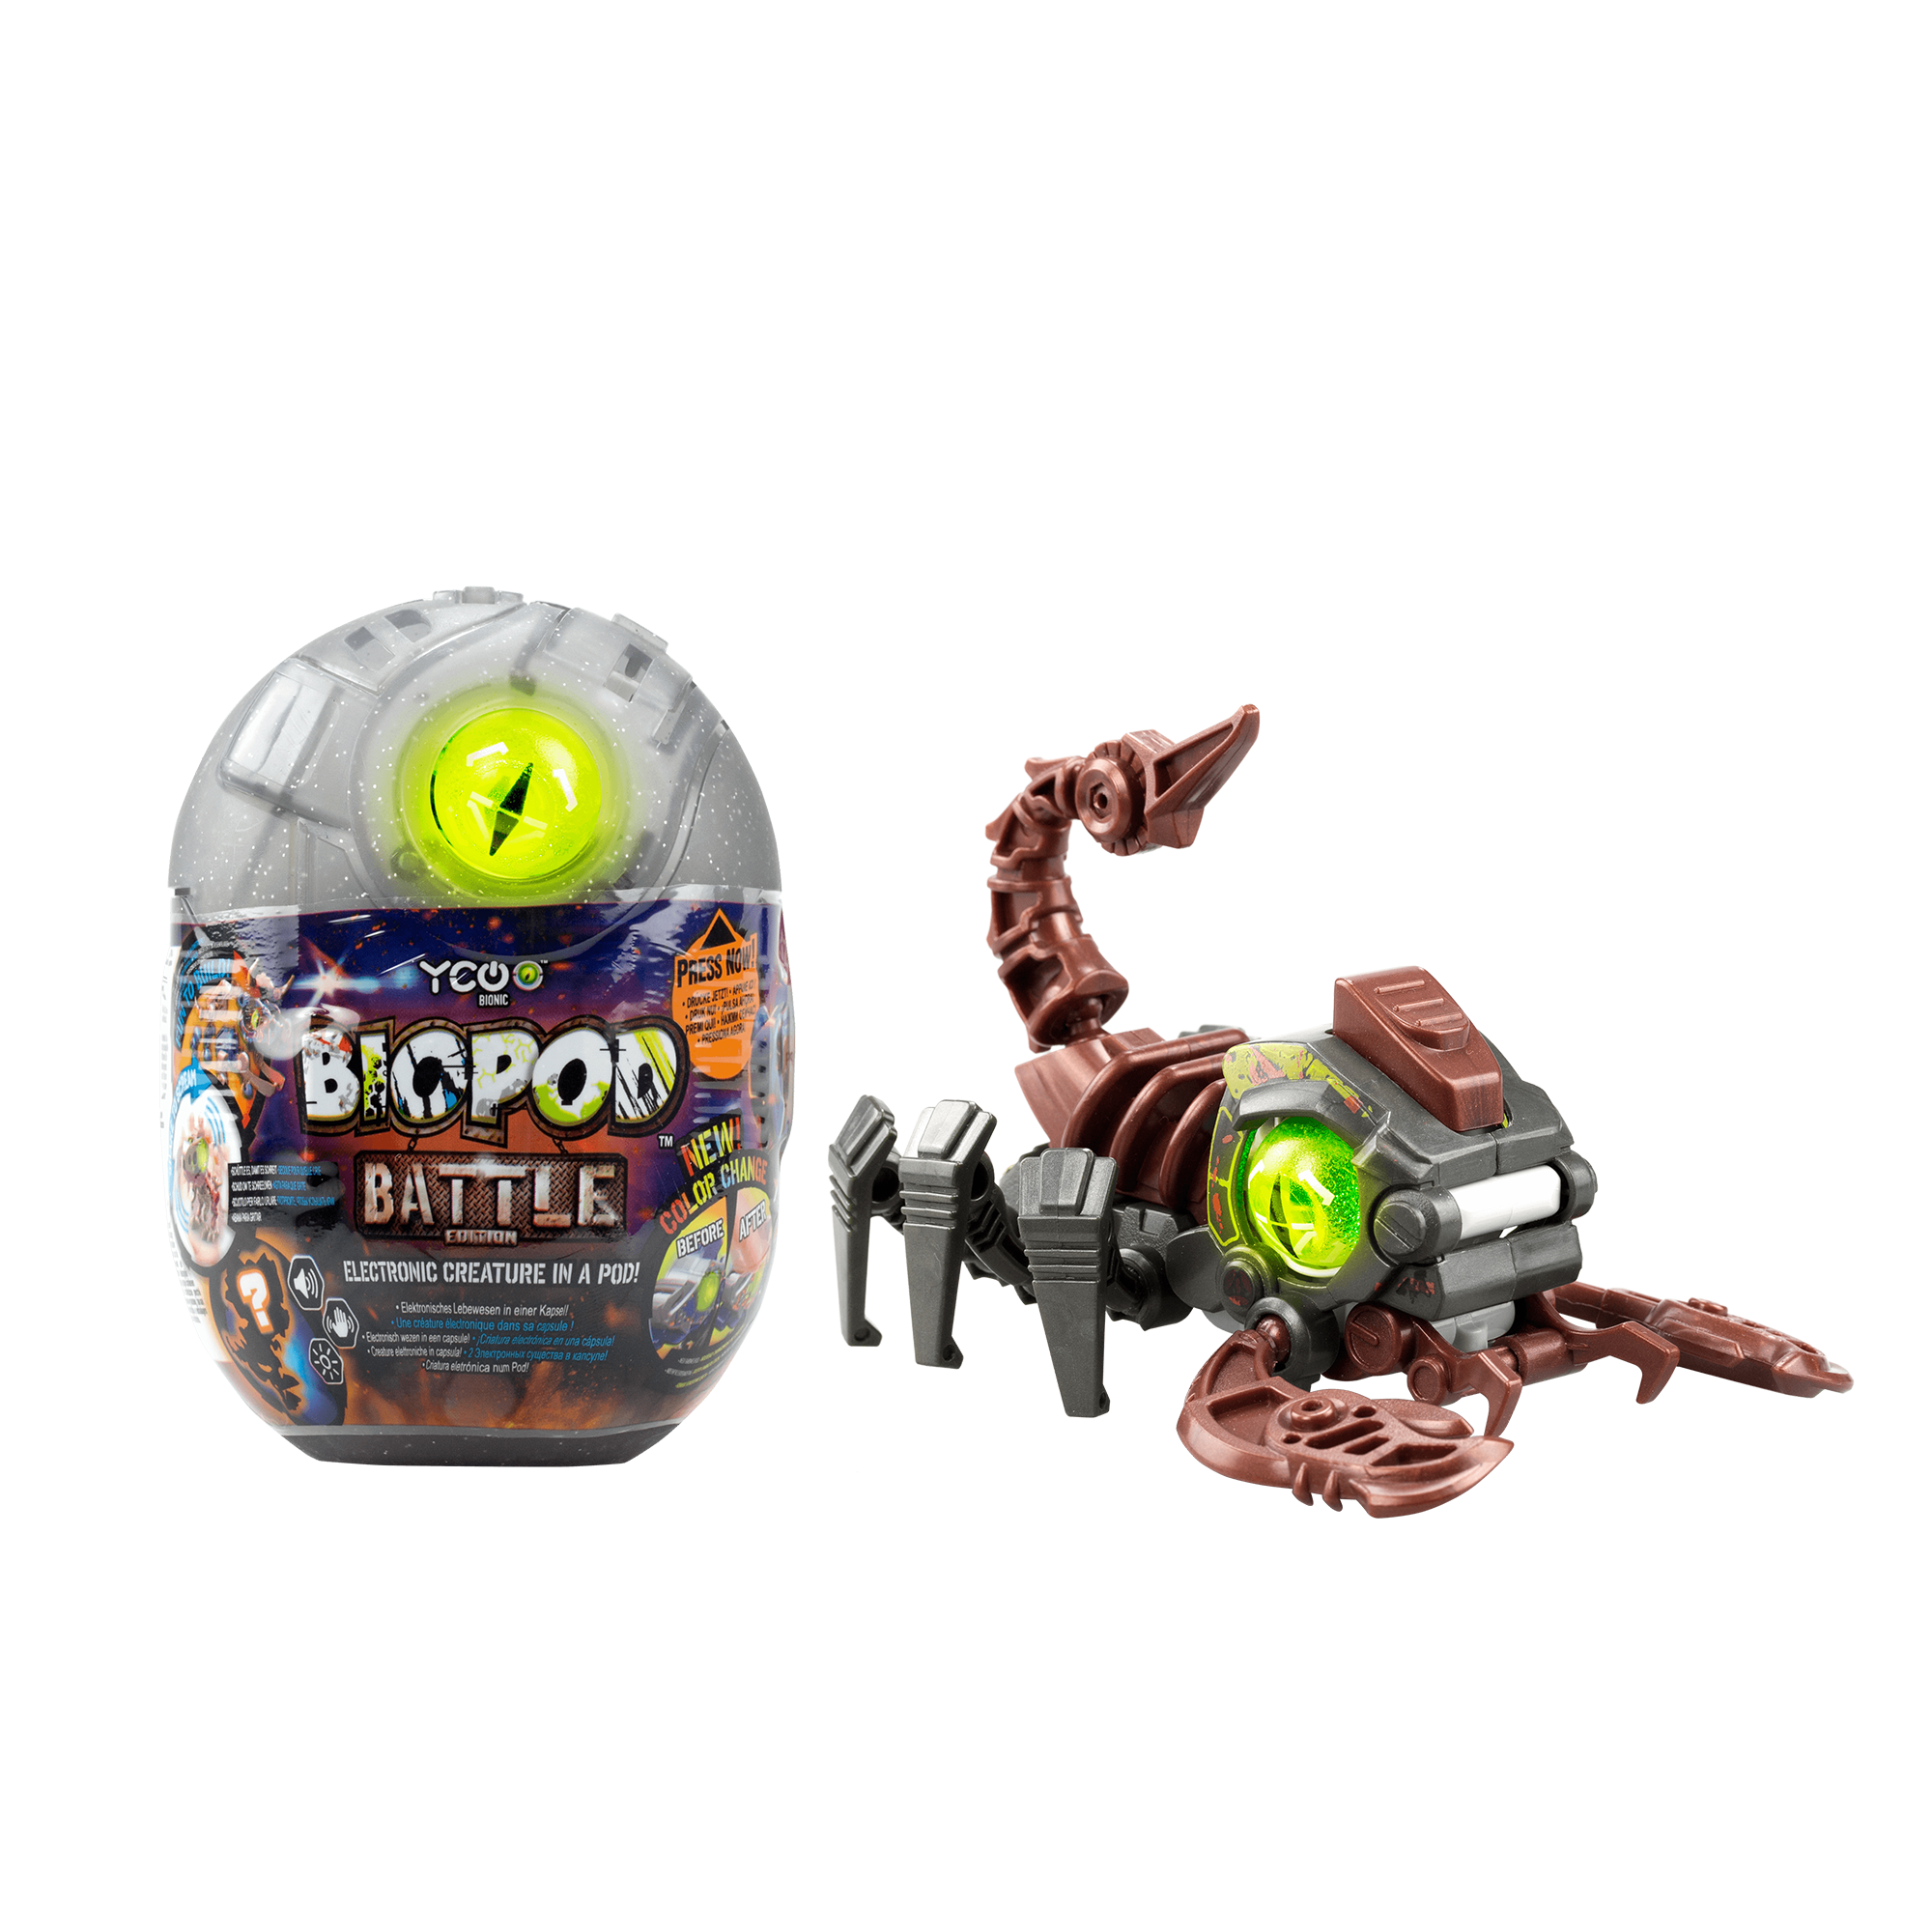 YCOO -MEGA BIOPOD - Robot Dinosaure intéractif dans sa capsule